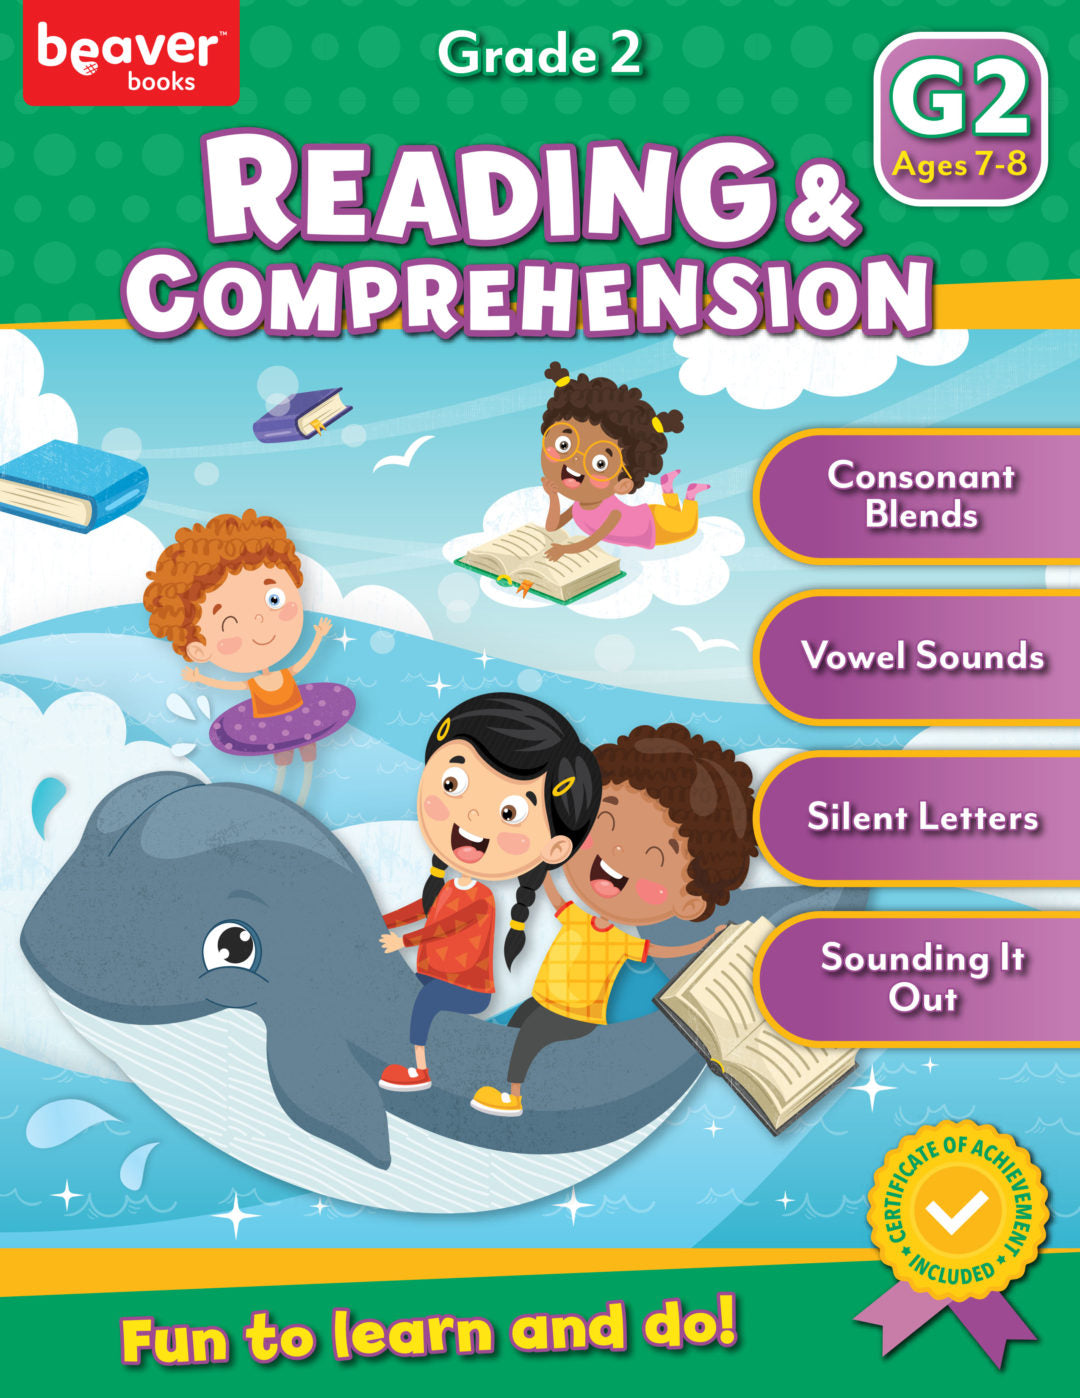 beaver books Reading & Comprehension : Grade 2